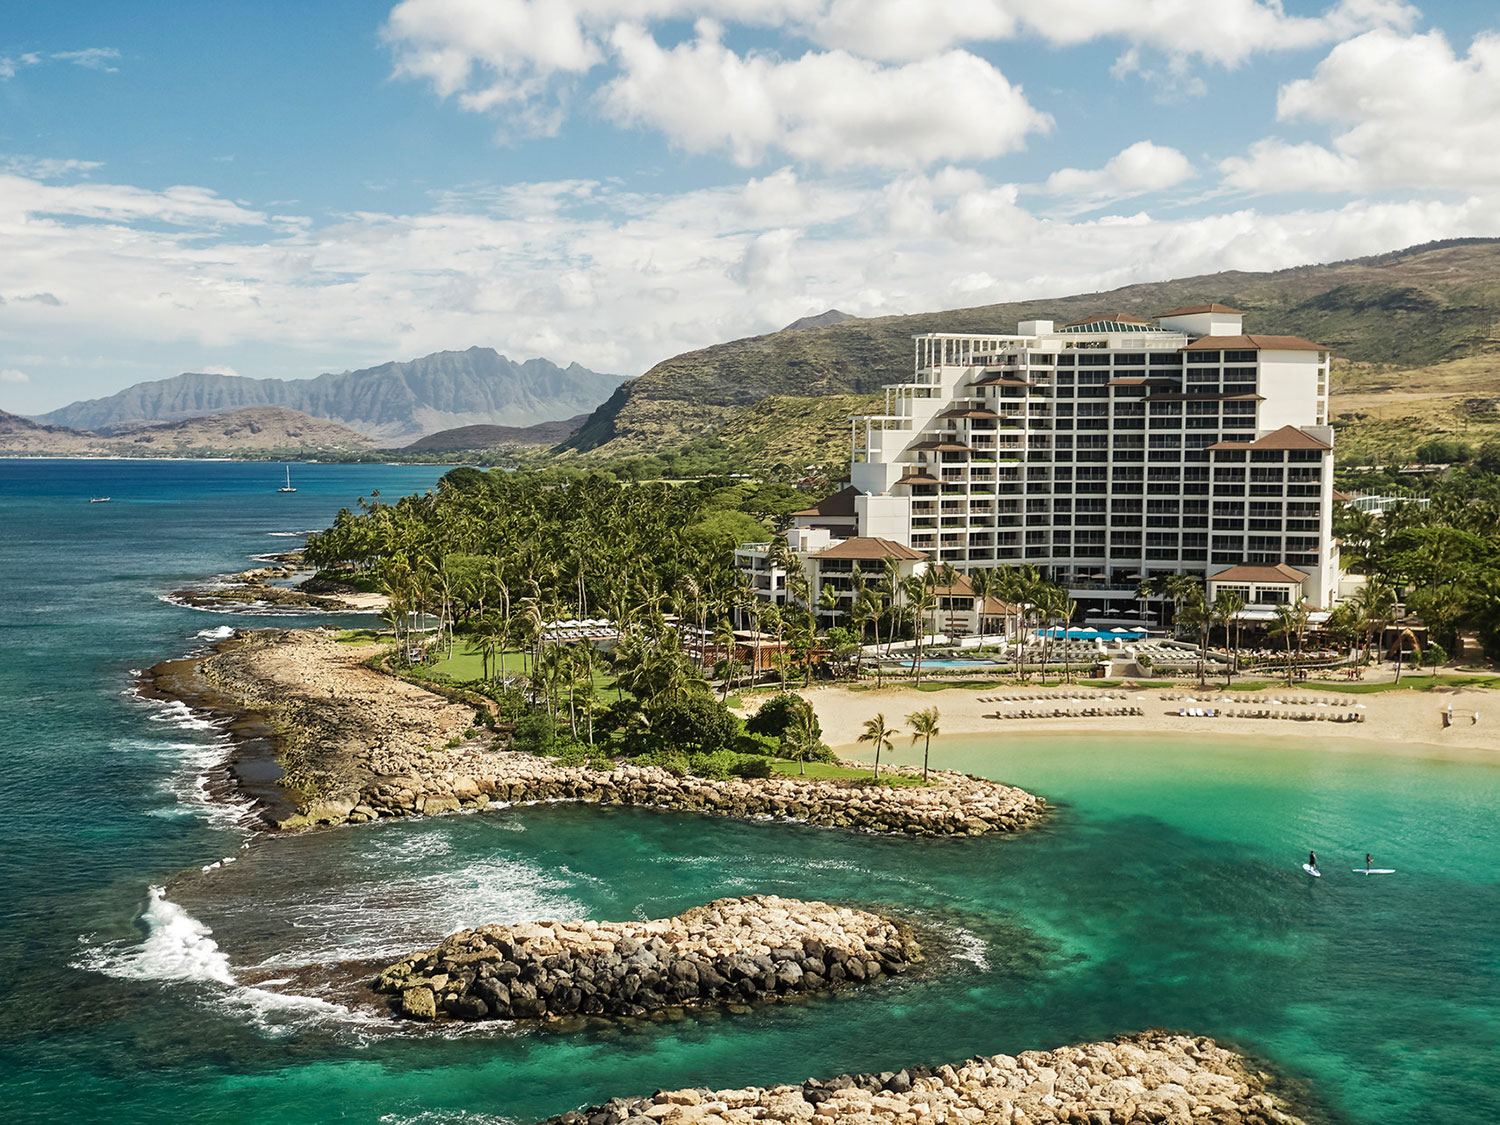 Aerial view of The Four Seasons Resort at Ko Olina on the Hawaiian island of Oahu.